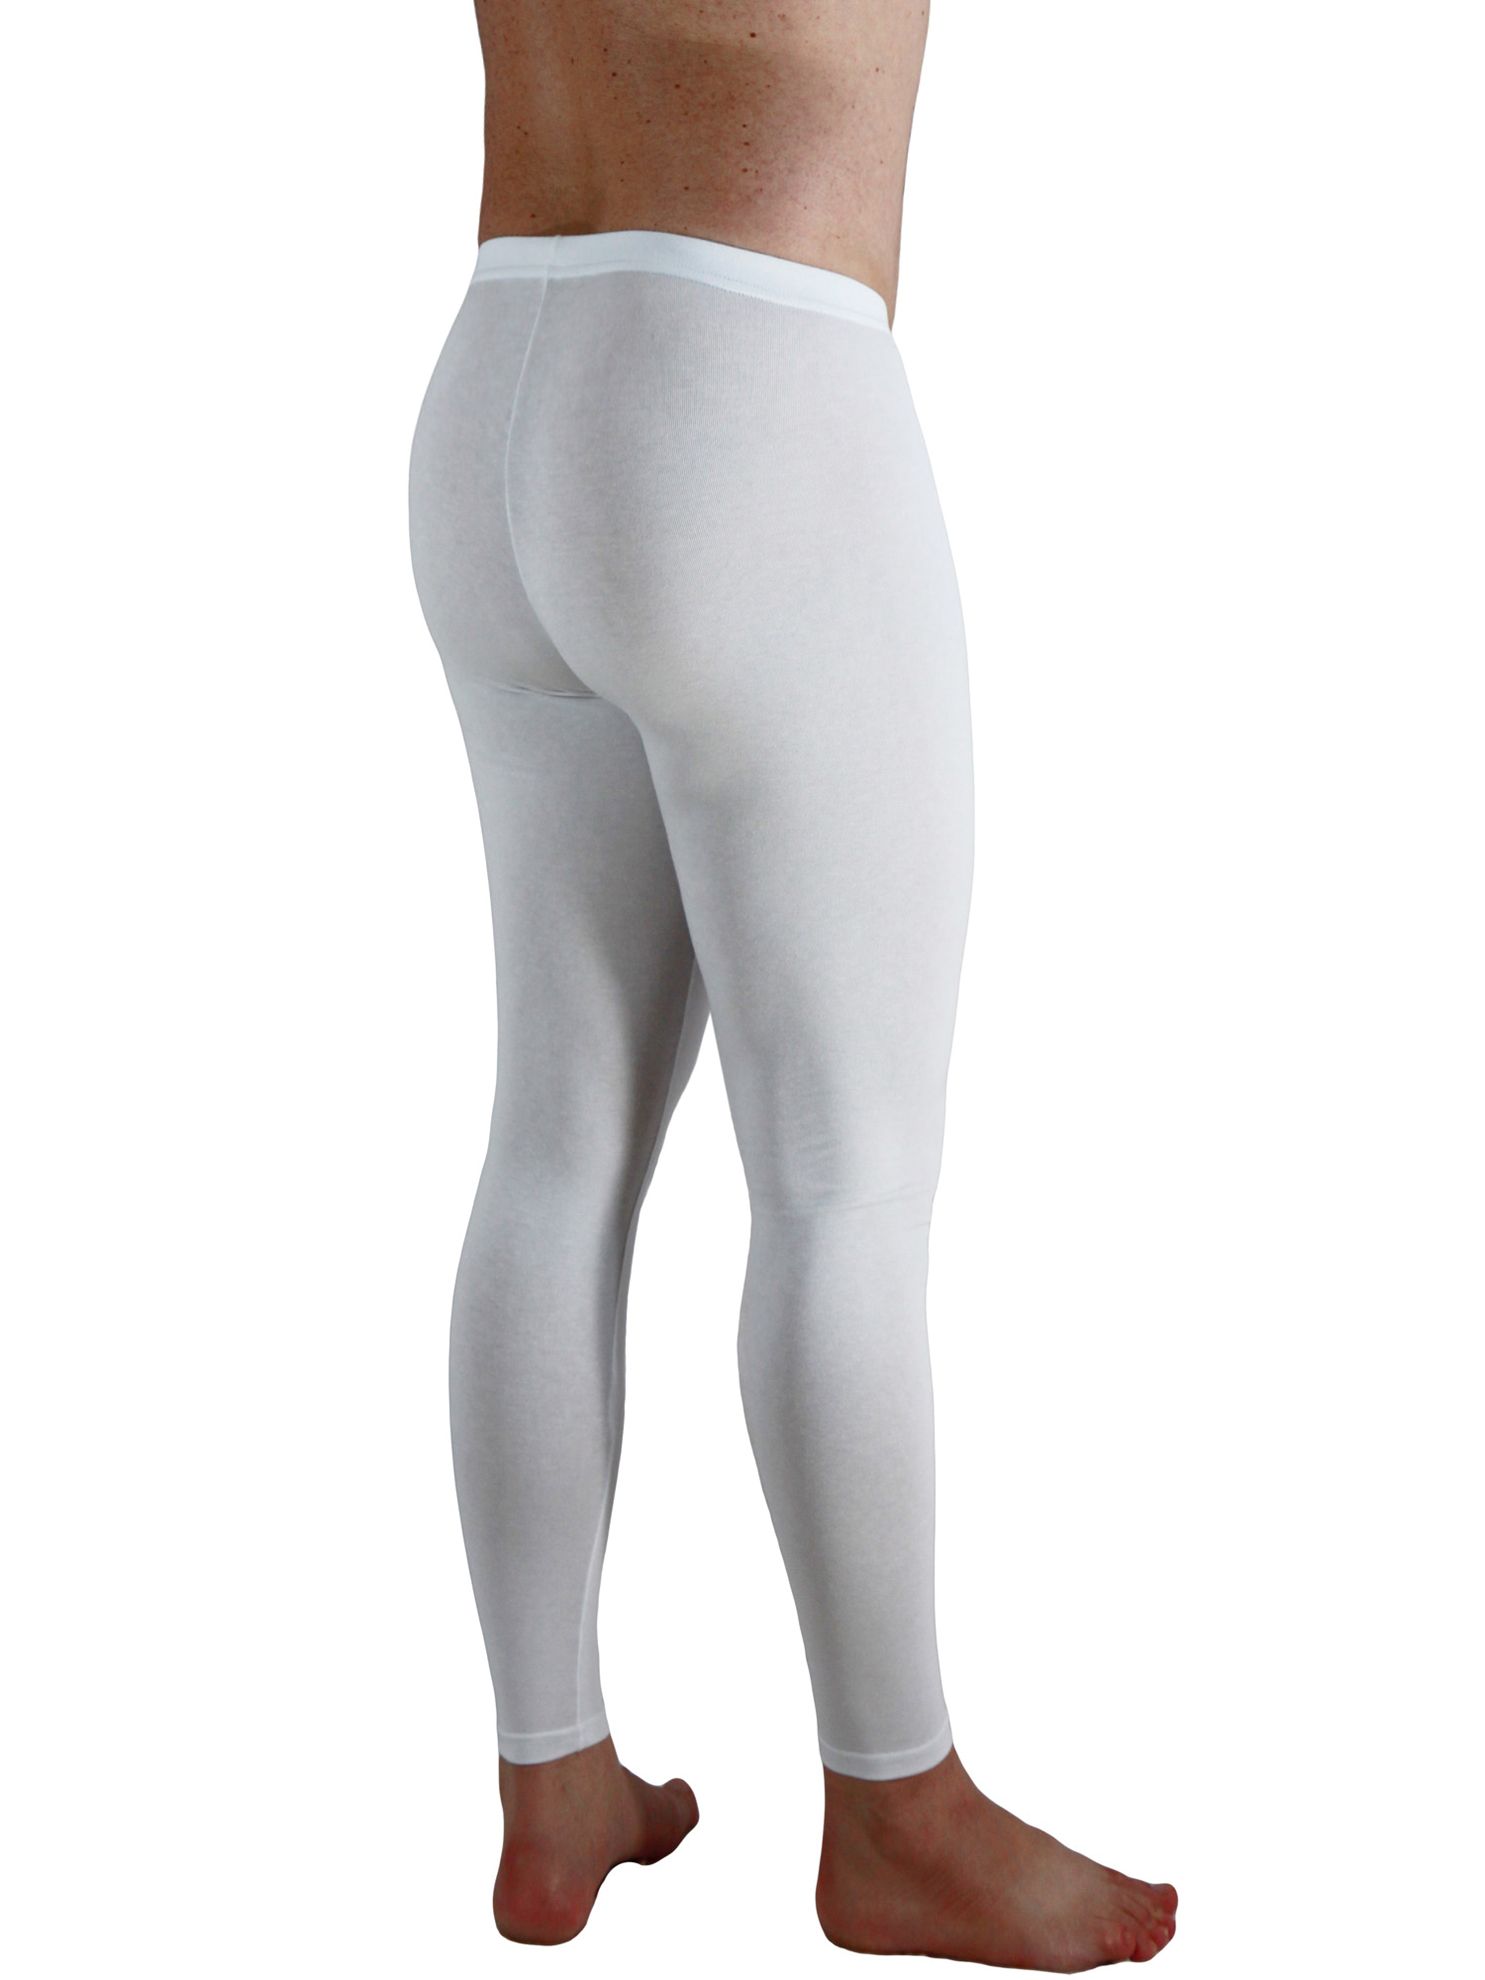 Organic Cotton Herringbone Leggings Light Color Leggings Grey and White  Patterned Leggings 